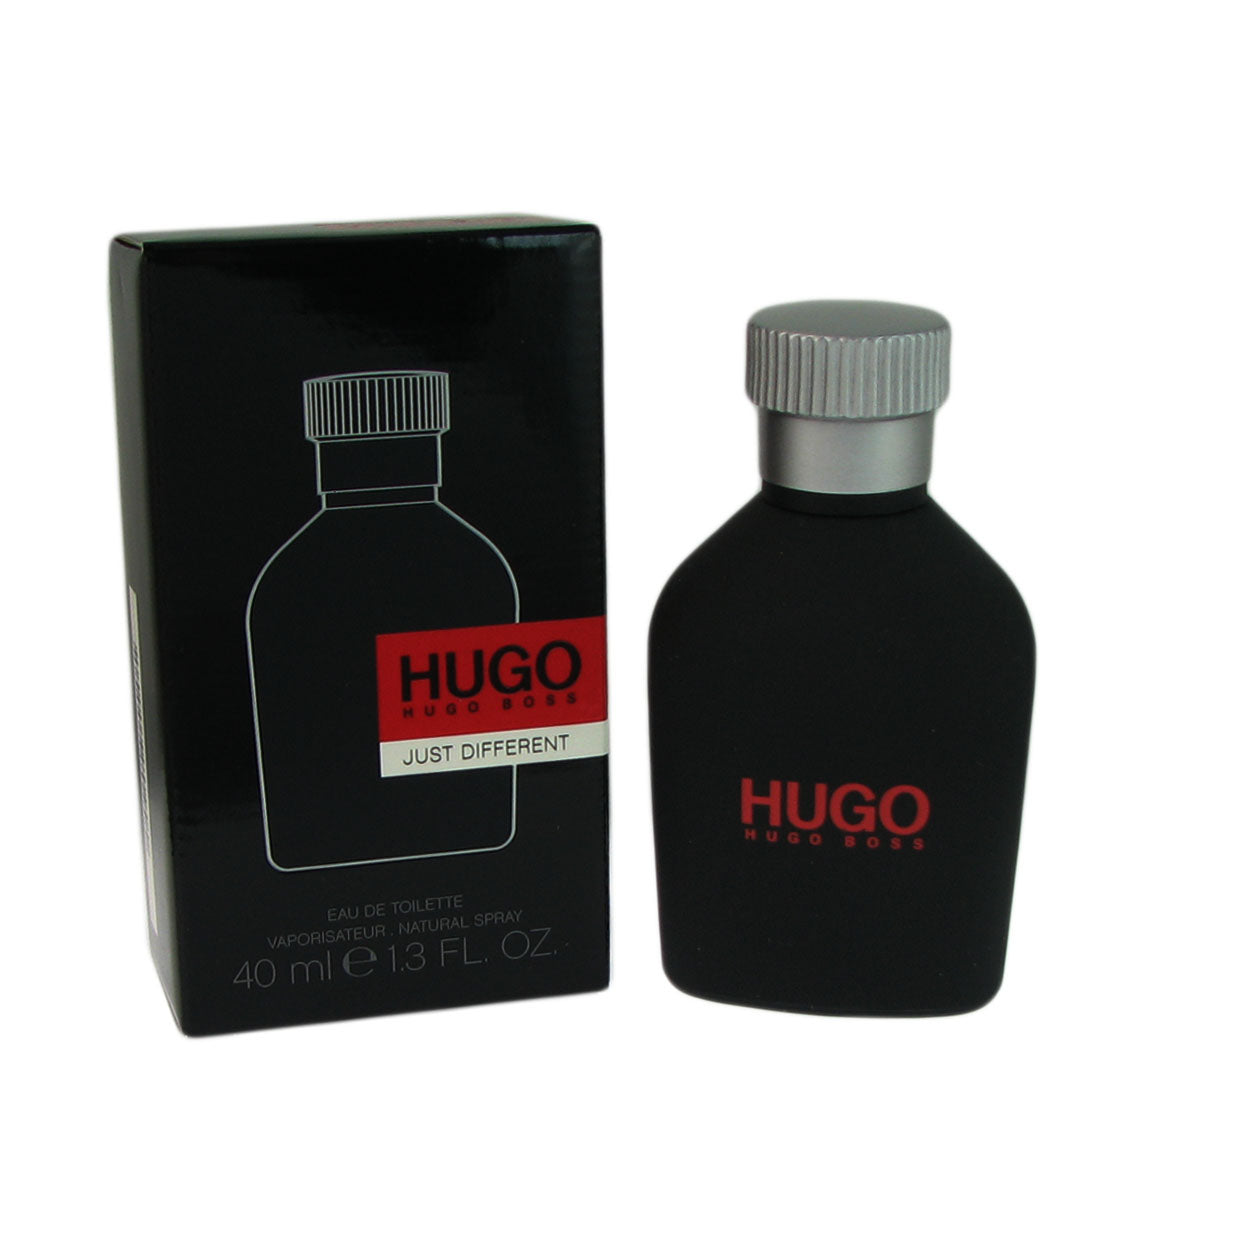 Hugo Just Different for Men by Hugo Boss 1.3oz Eau de Toilette Spray